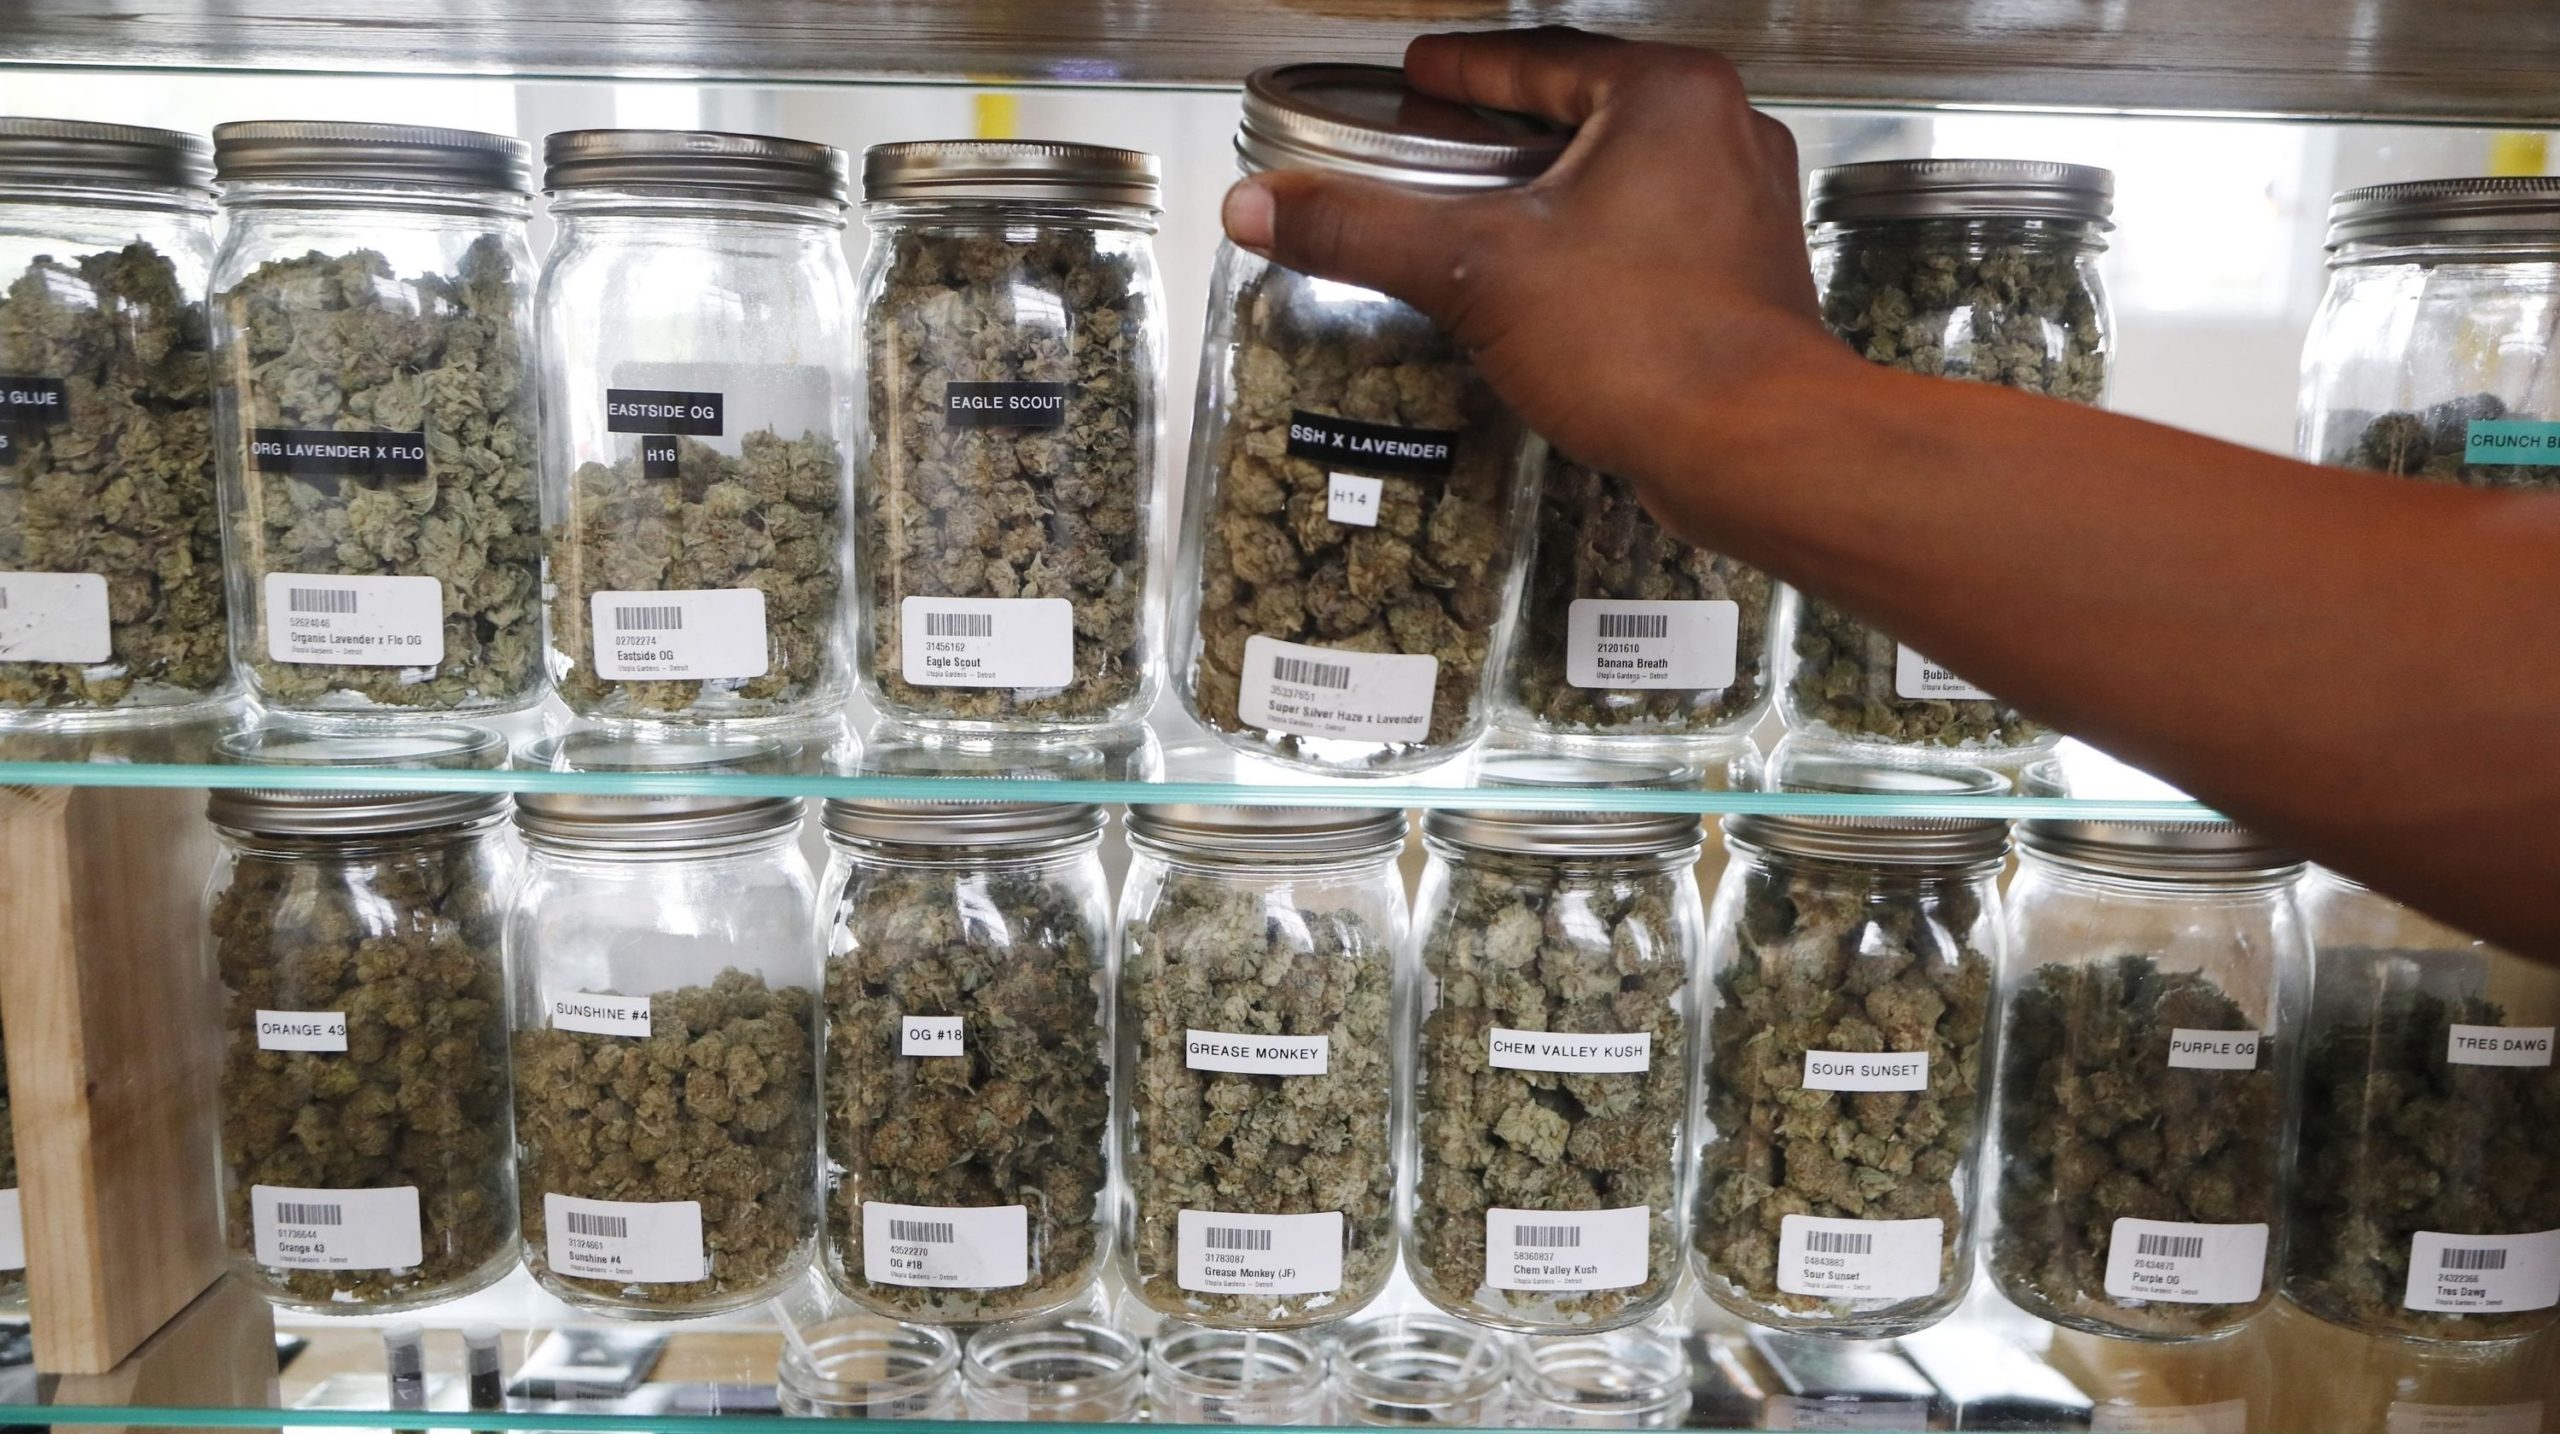 Report: Michigan recreational marijuana market to rival Colorado's